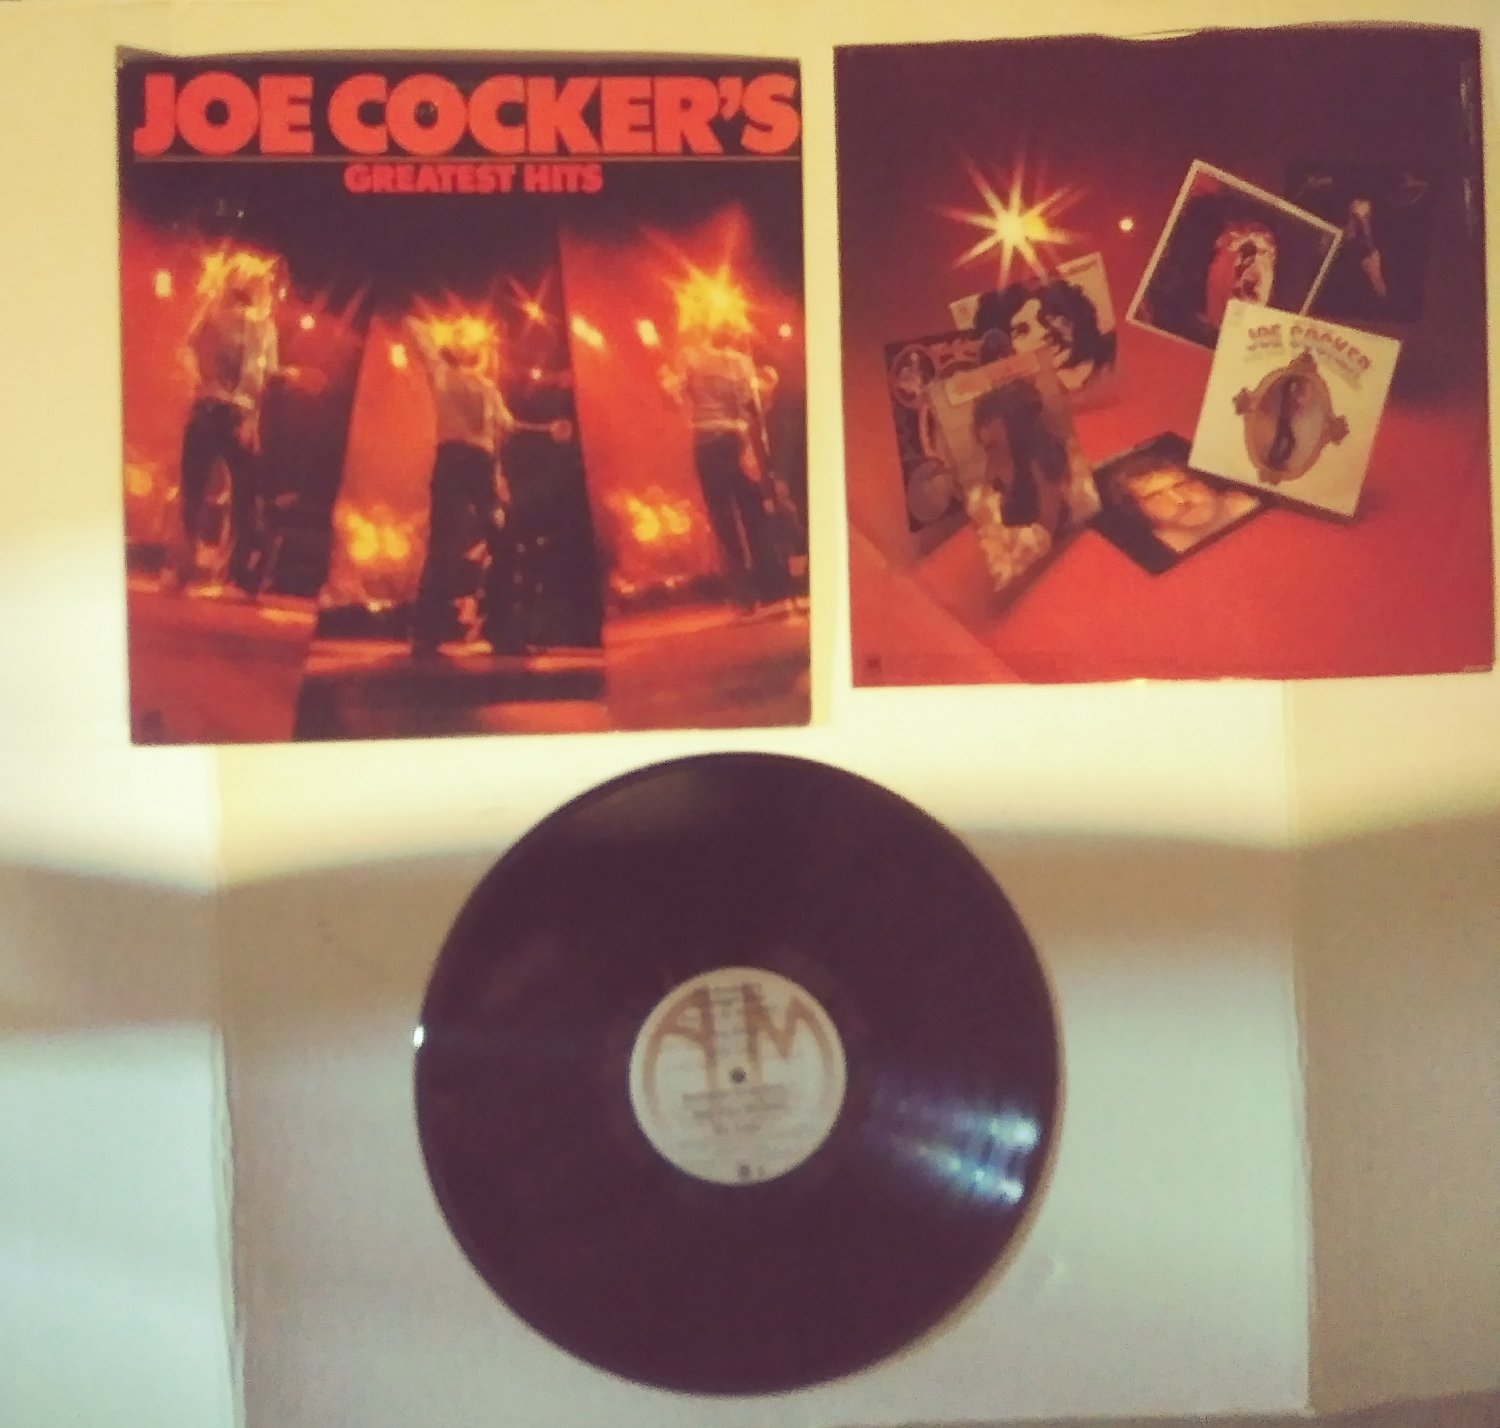 Vintage 1977 Album Joe Cocker Greatest Hits LP